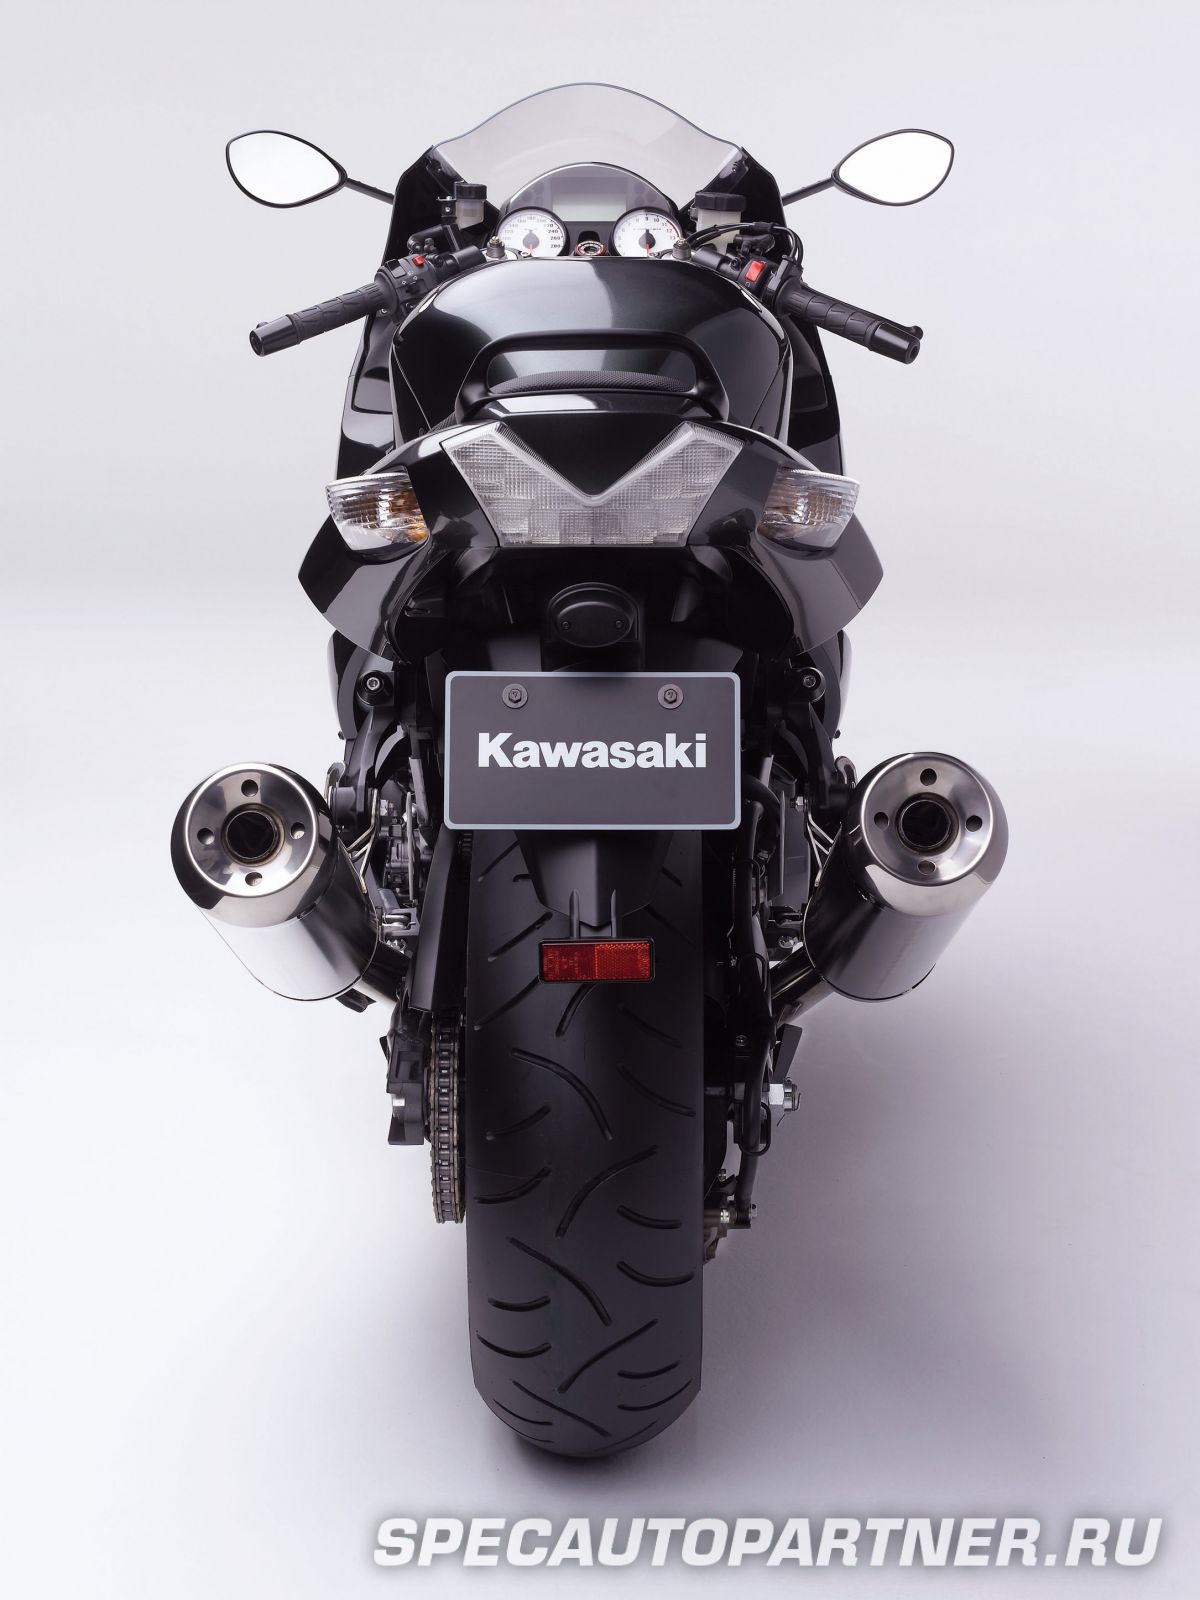 Kawasaki ZZR-1400 (2007) мотоцикл спорт-туризм 1400 куб.см